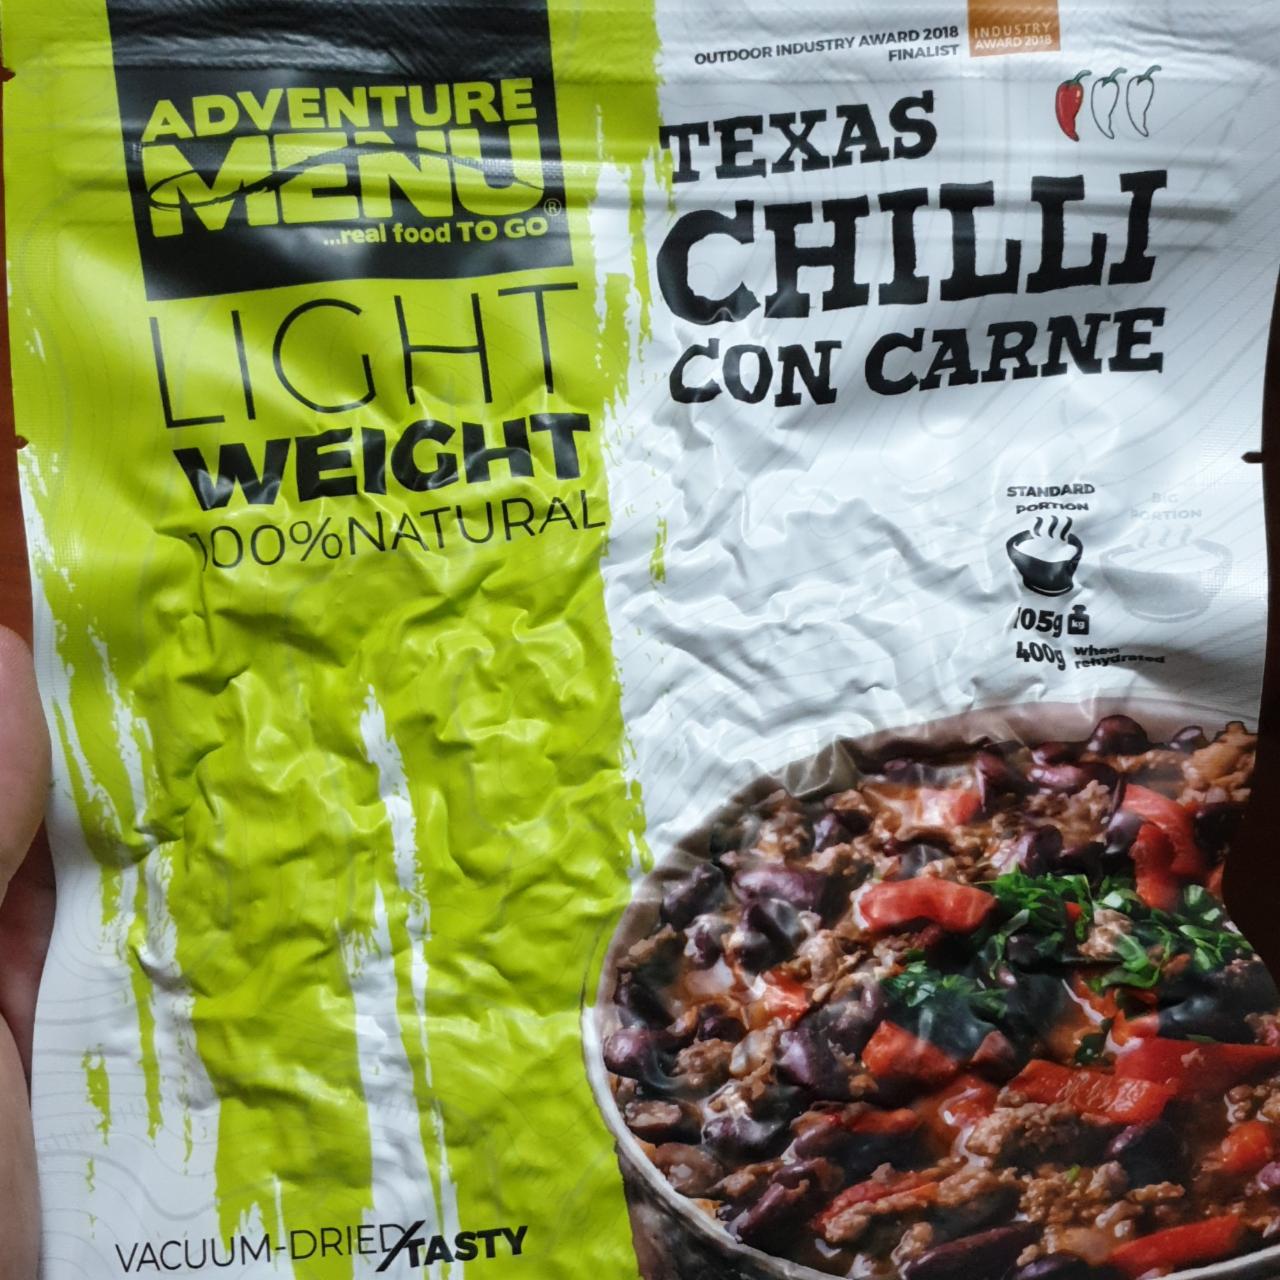 Fotografie - Texas Chilli Con Carne Light Weight Adventure Menu